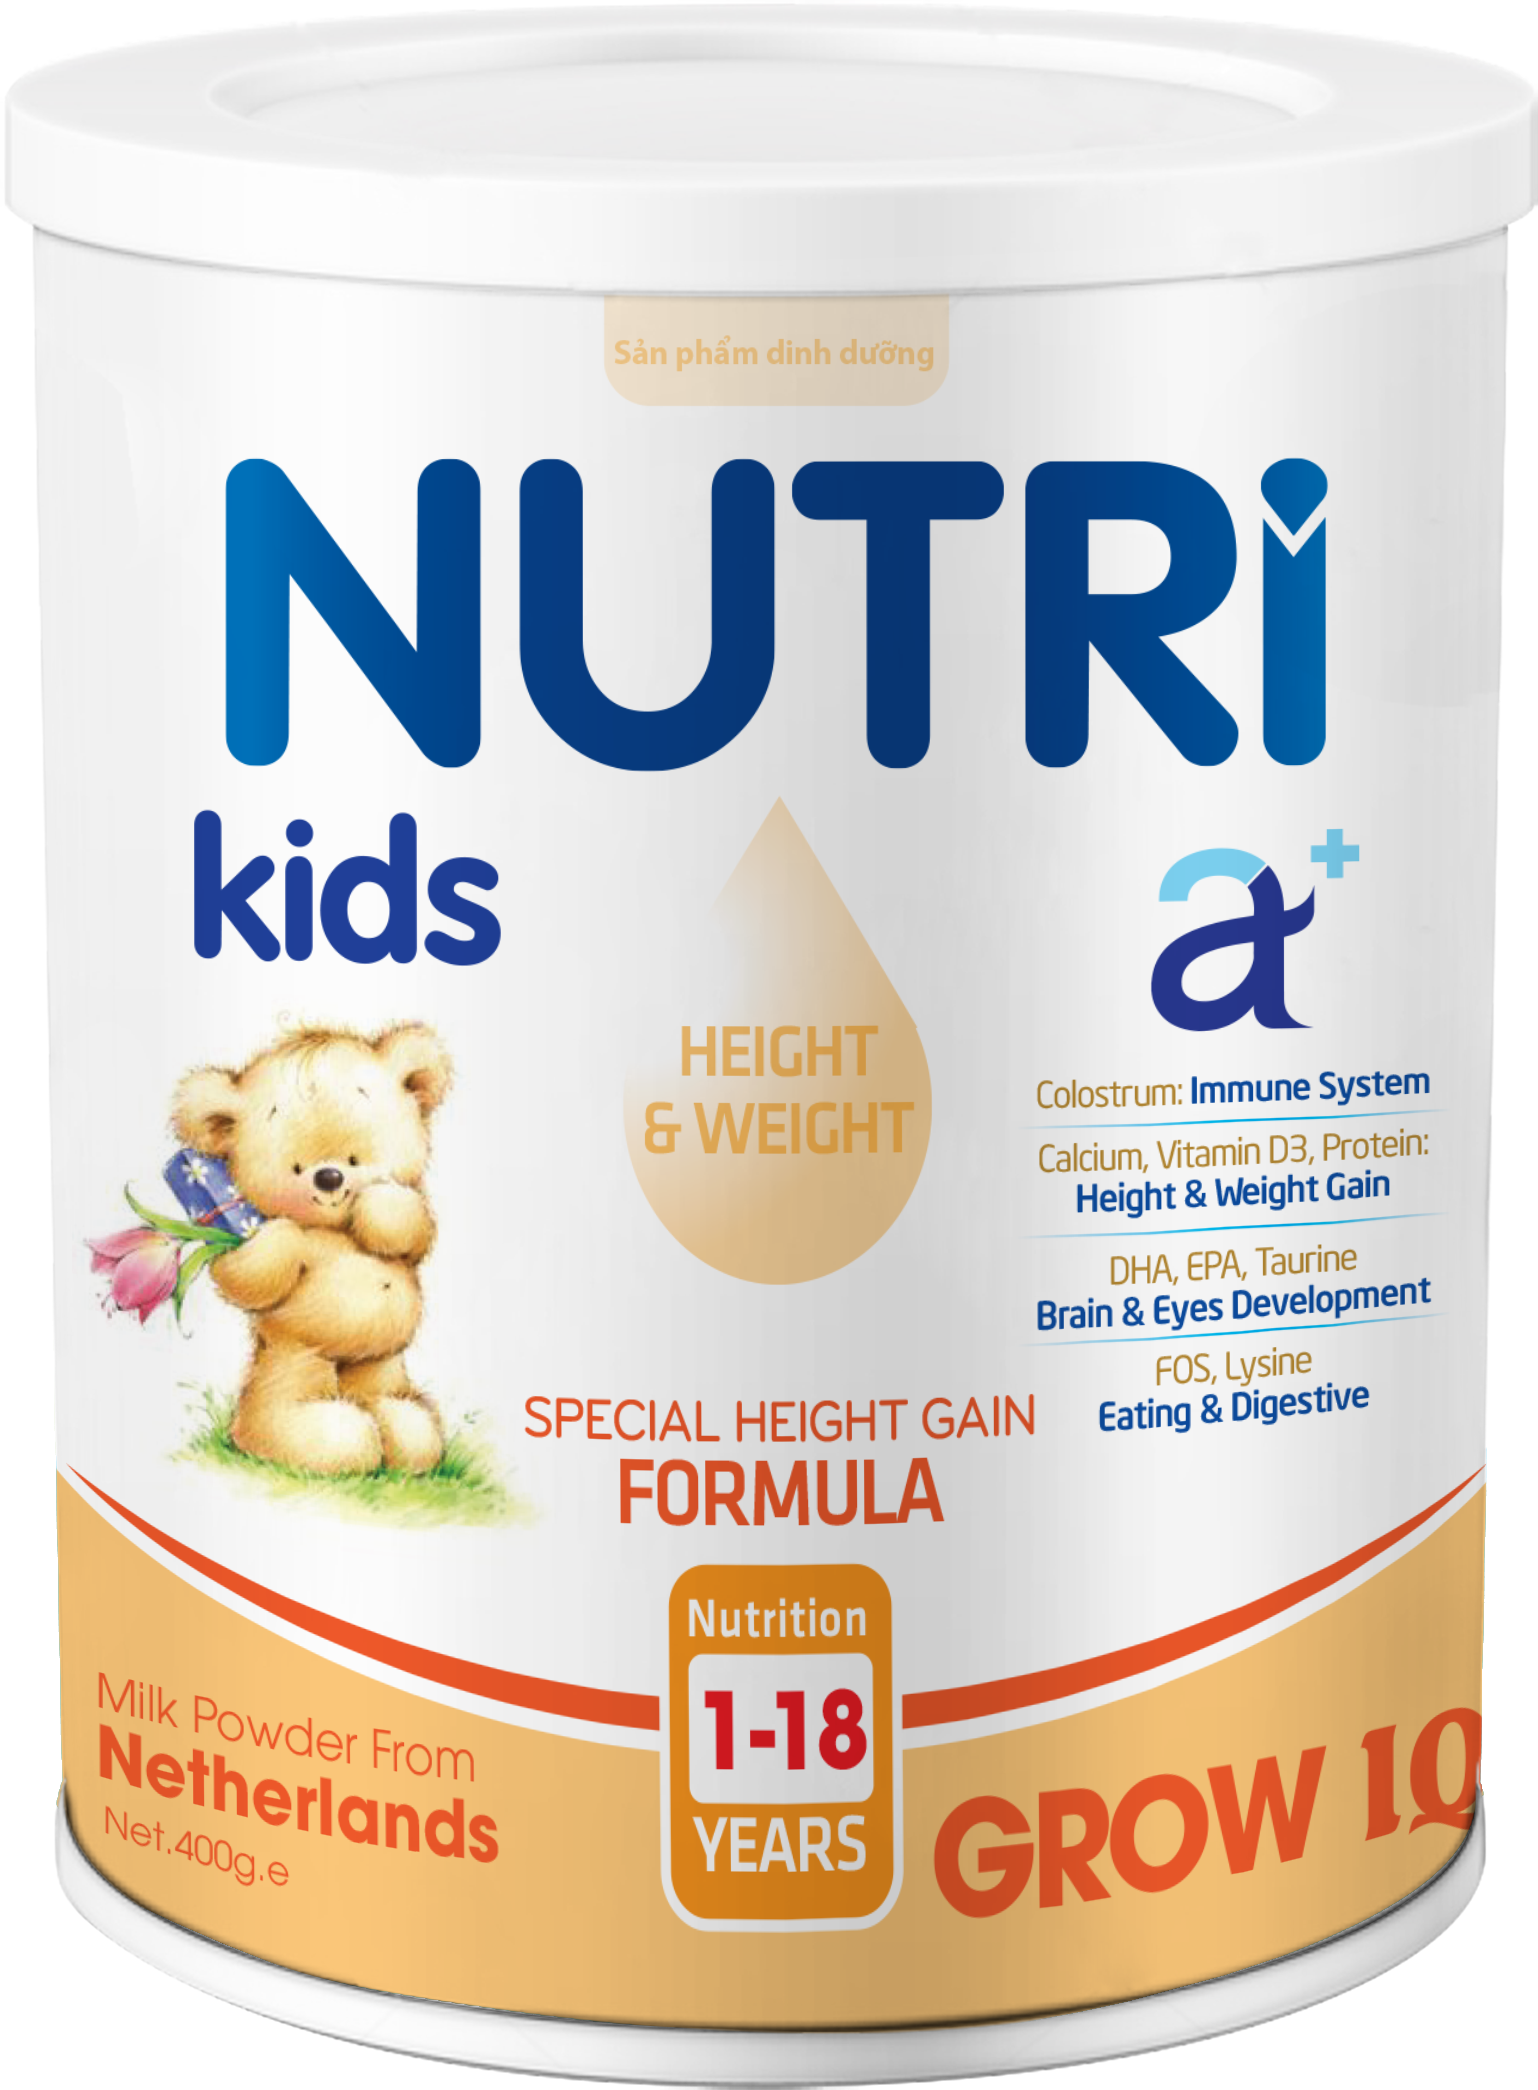 NUTRI KIDS A+ GROW IQ 400g